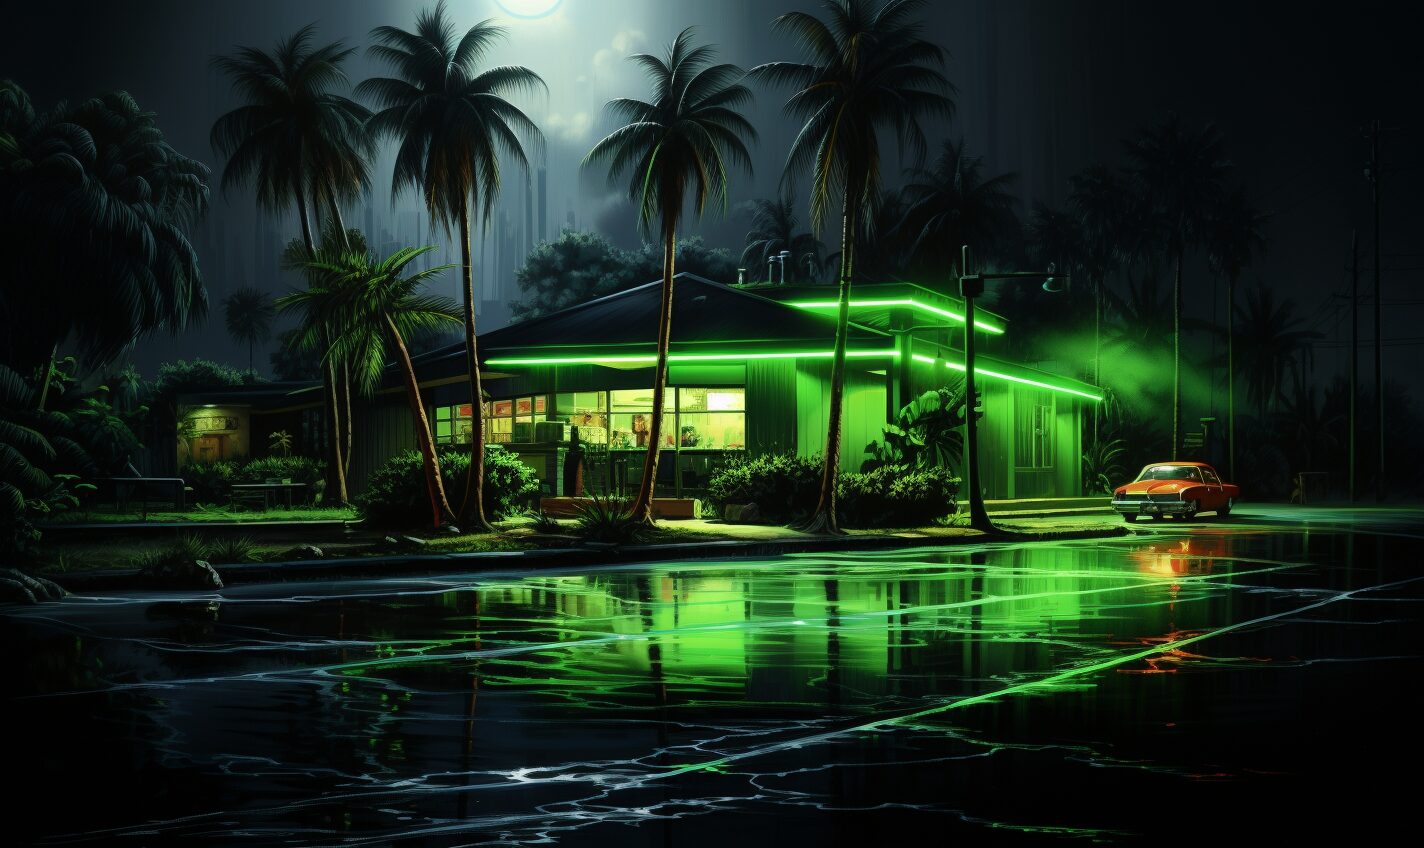 miami, florida in black and neon green glow